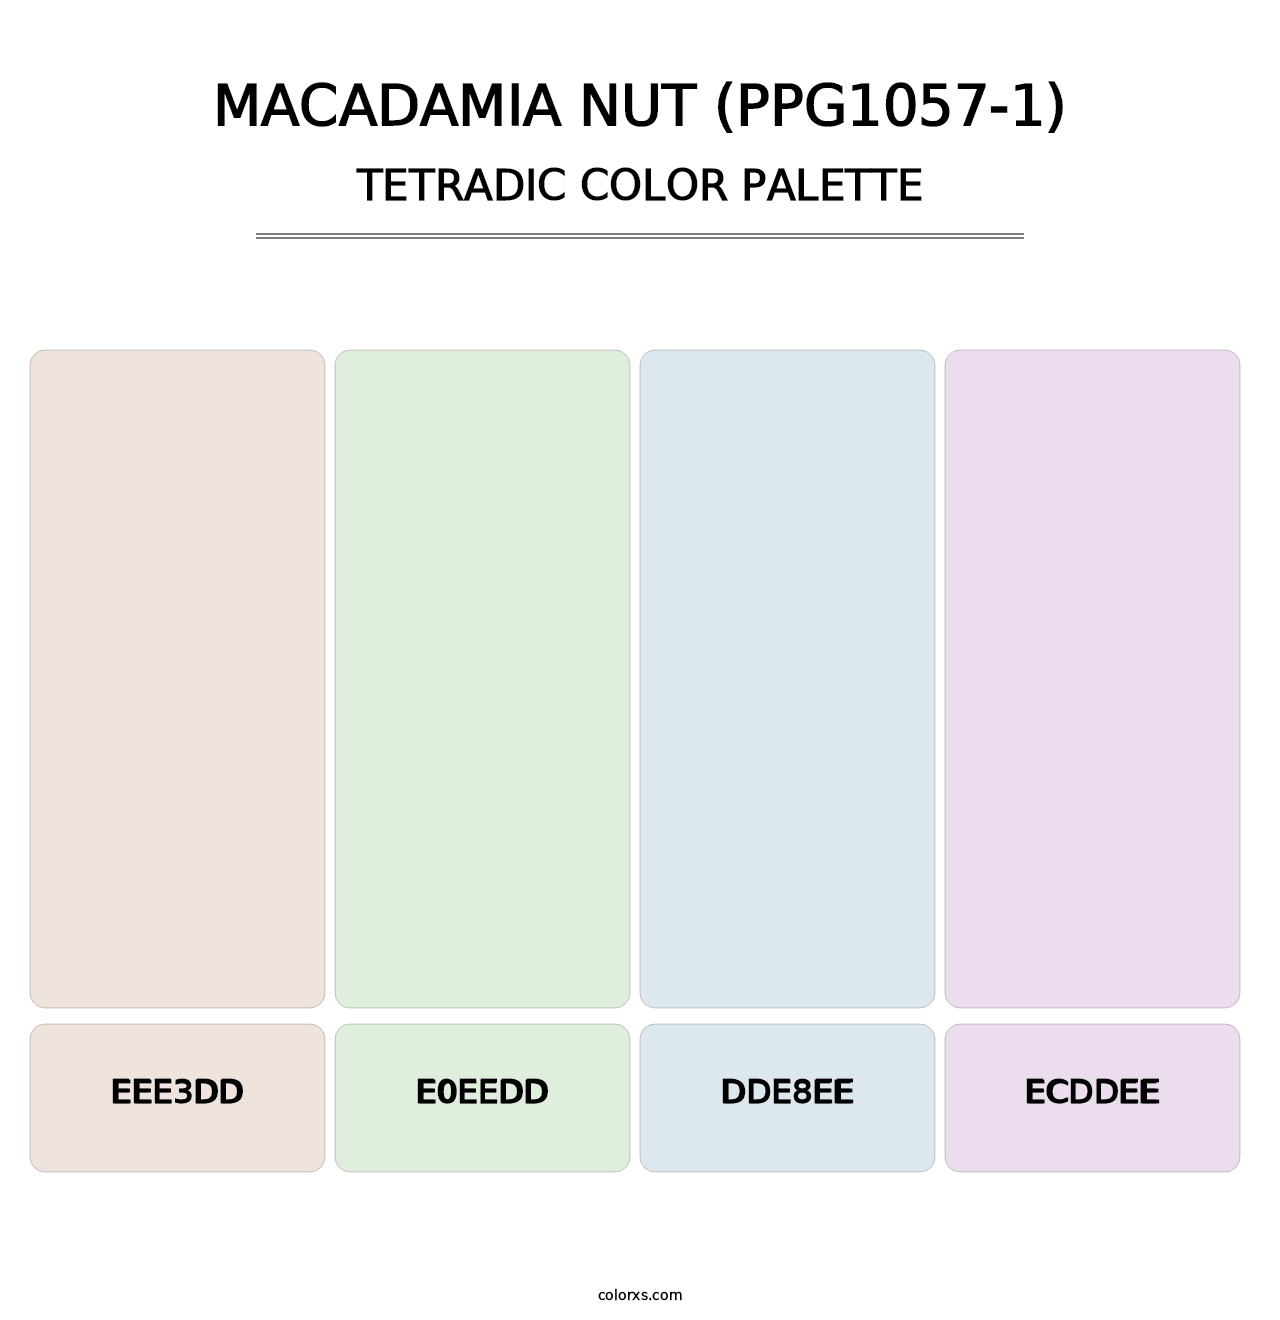 Macadamia Nut (PPG1057-1) - Tetradic Color Palette